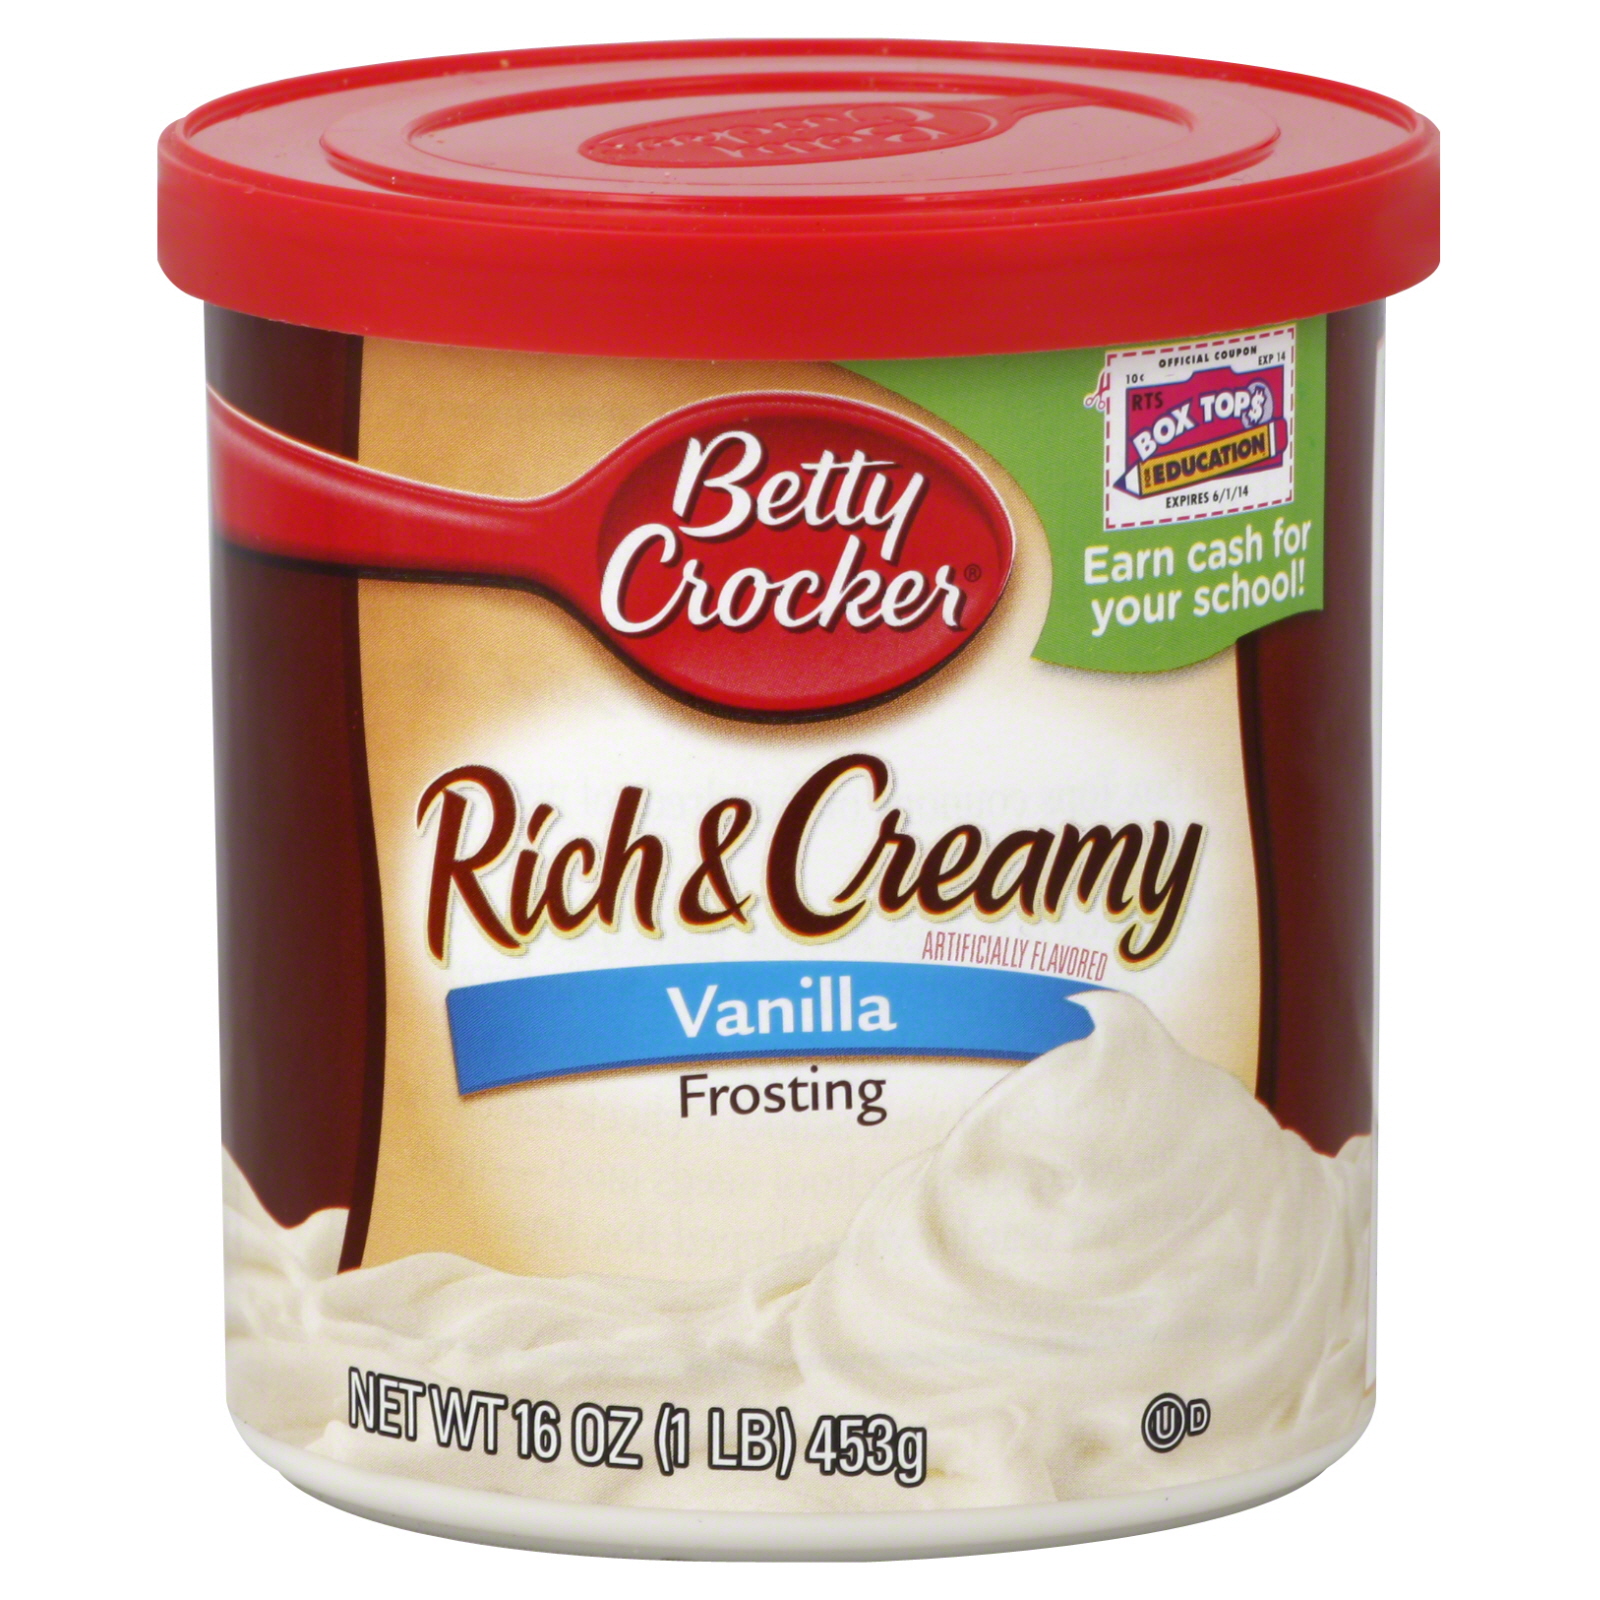 Betty Crocker Rich & Creamy Frosting, Vanilla, 16 oz (1 lb) 453 g